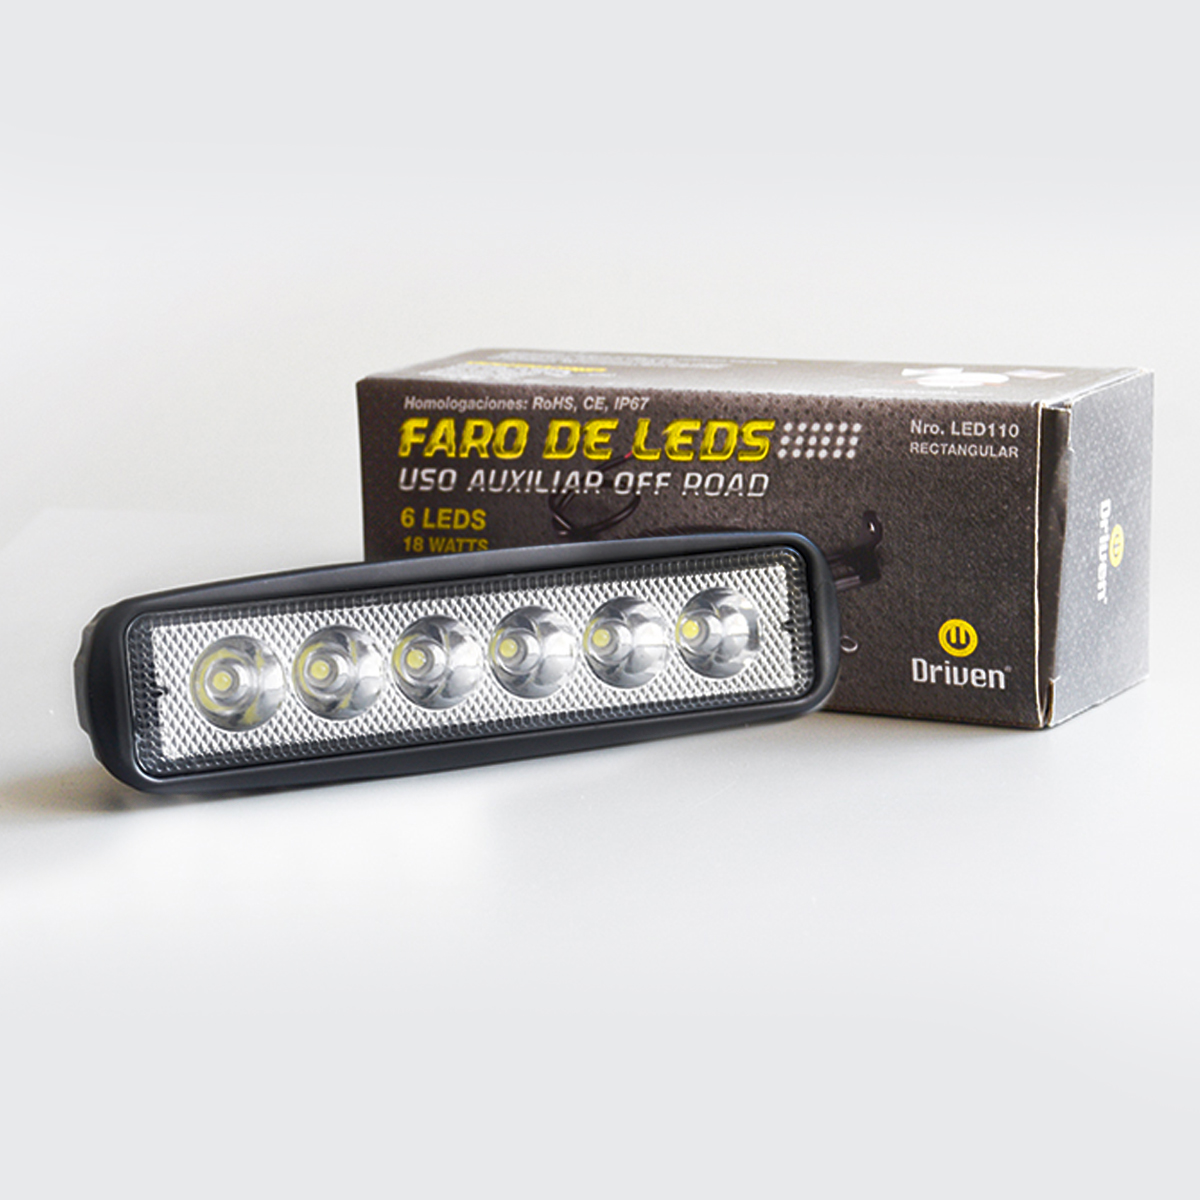 LED110 FARO DE LED OFF ROAD - 6 LEDS - 18 WATTS - DRIVEN